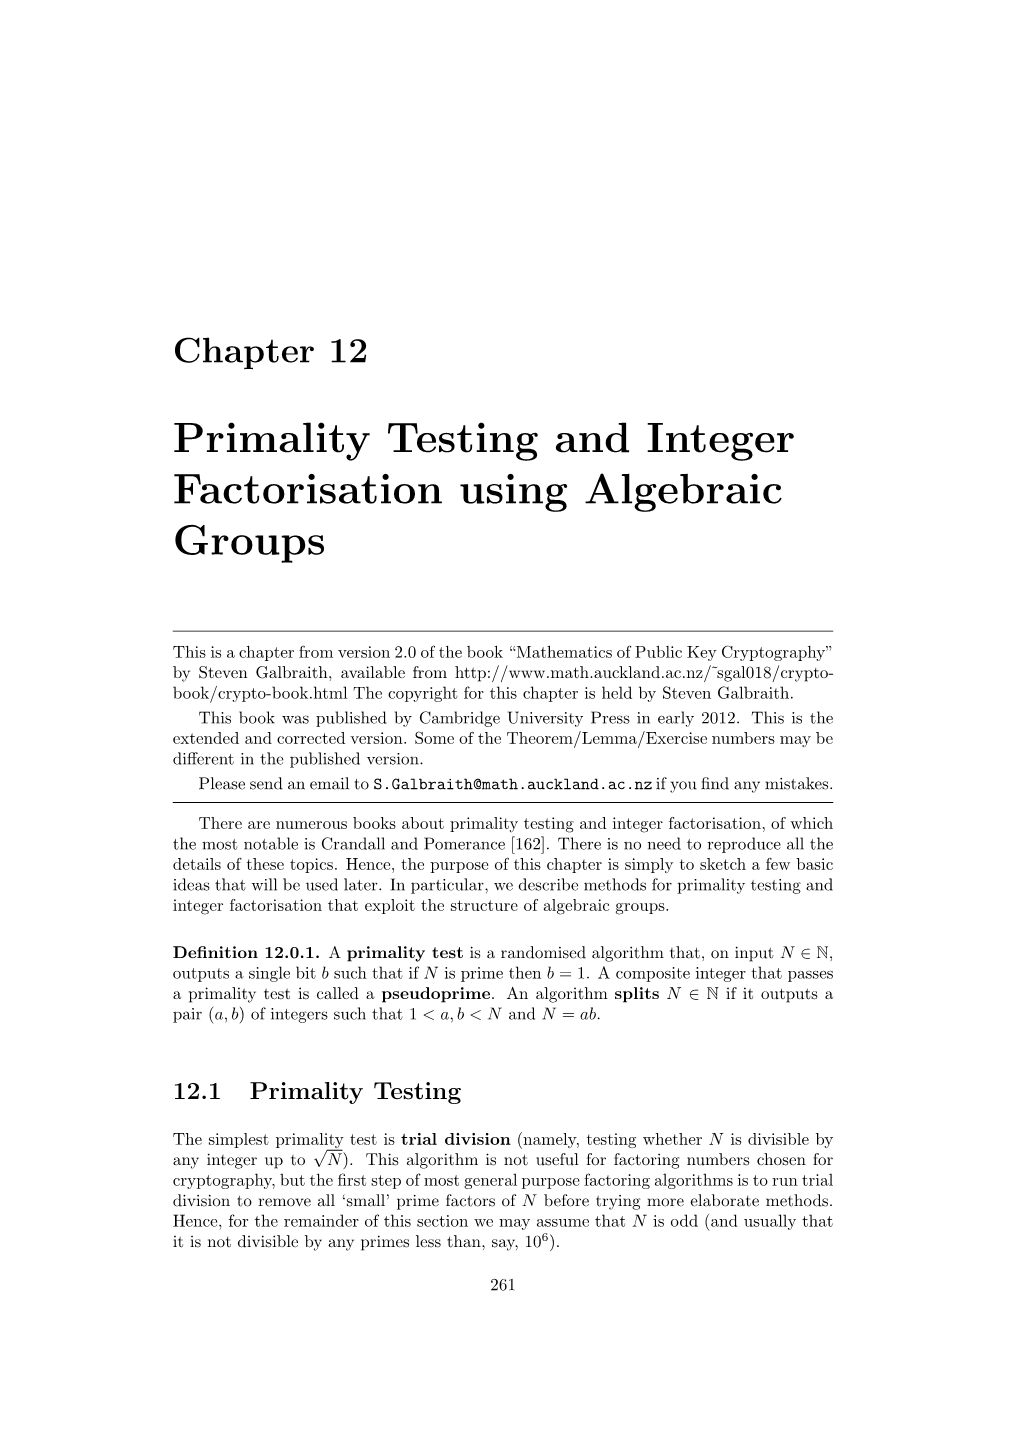 12. Primality Testing and Integer Factorisation Using Algebraic Groups